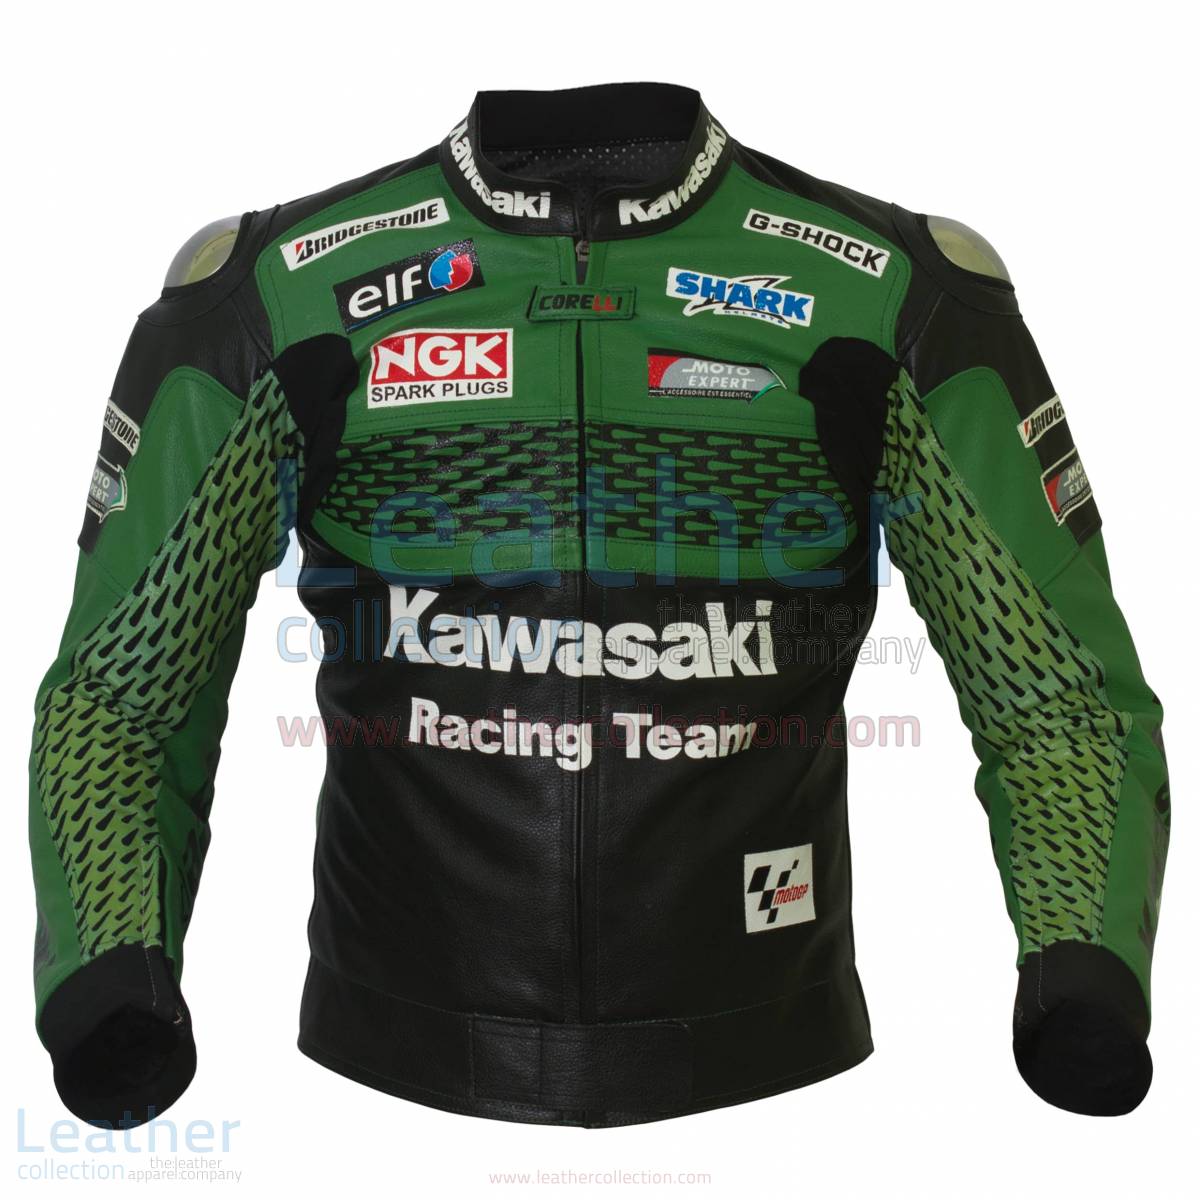 Kawasaki Racing Team Leather Jacket - Leather Jacket - MotoFace